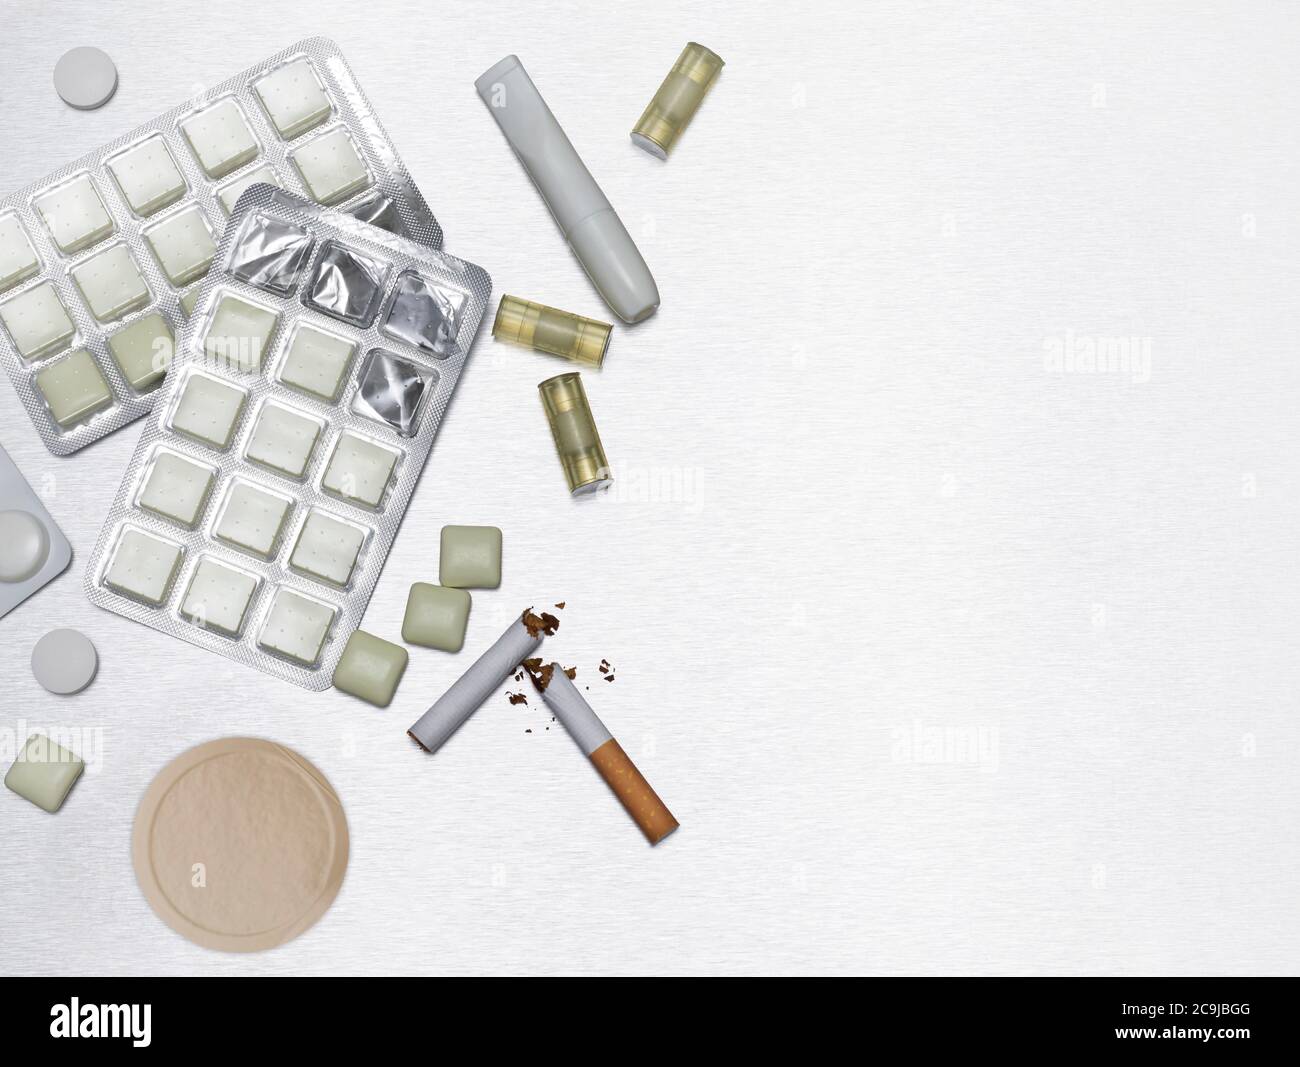 Gum and pills to help stop smoking. Stock Photo